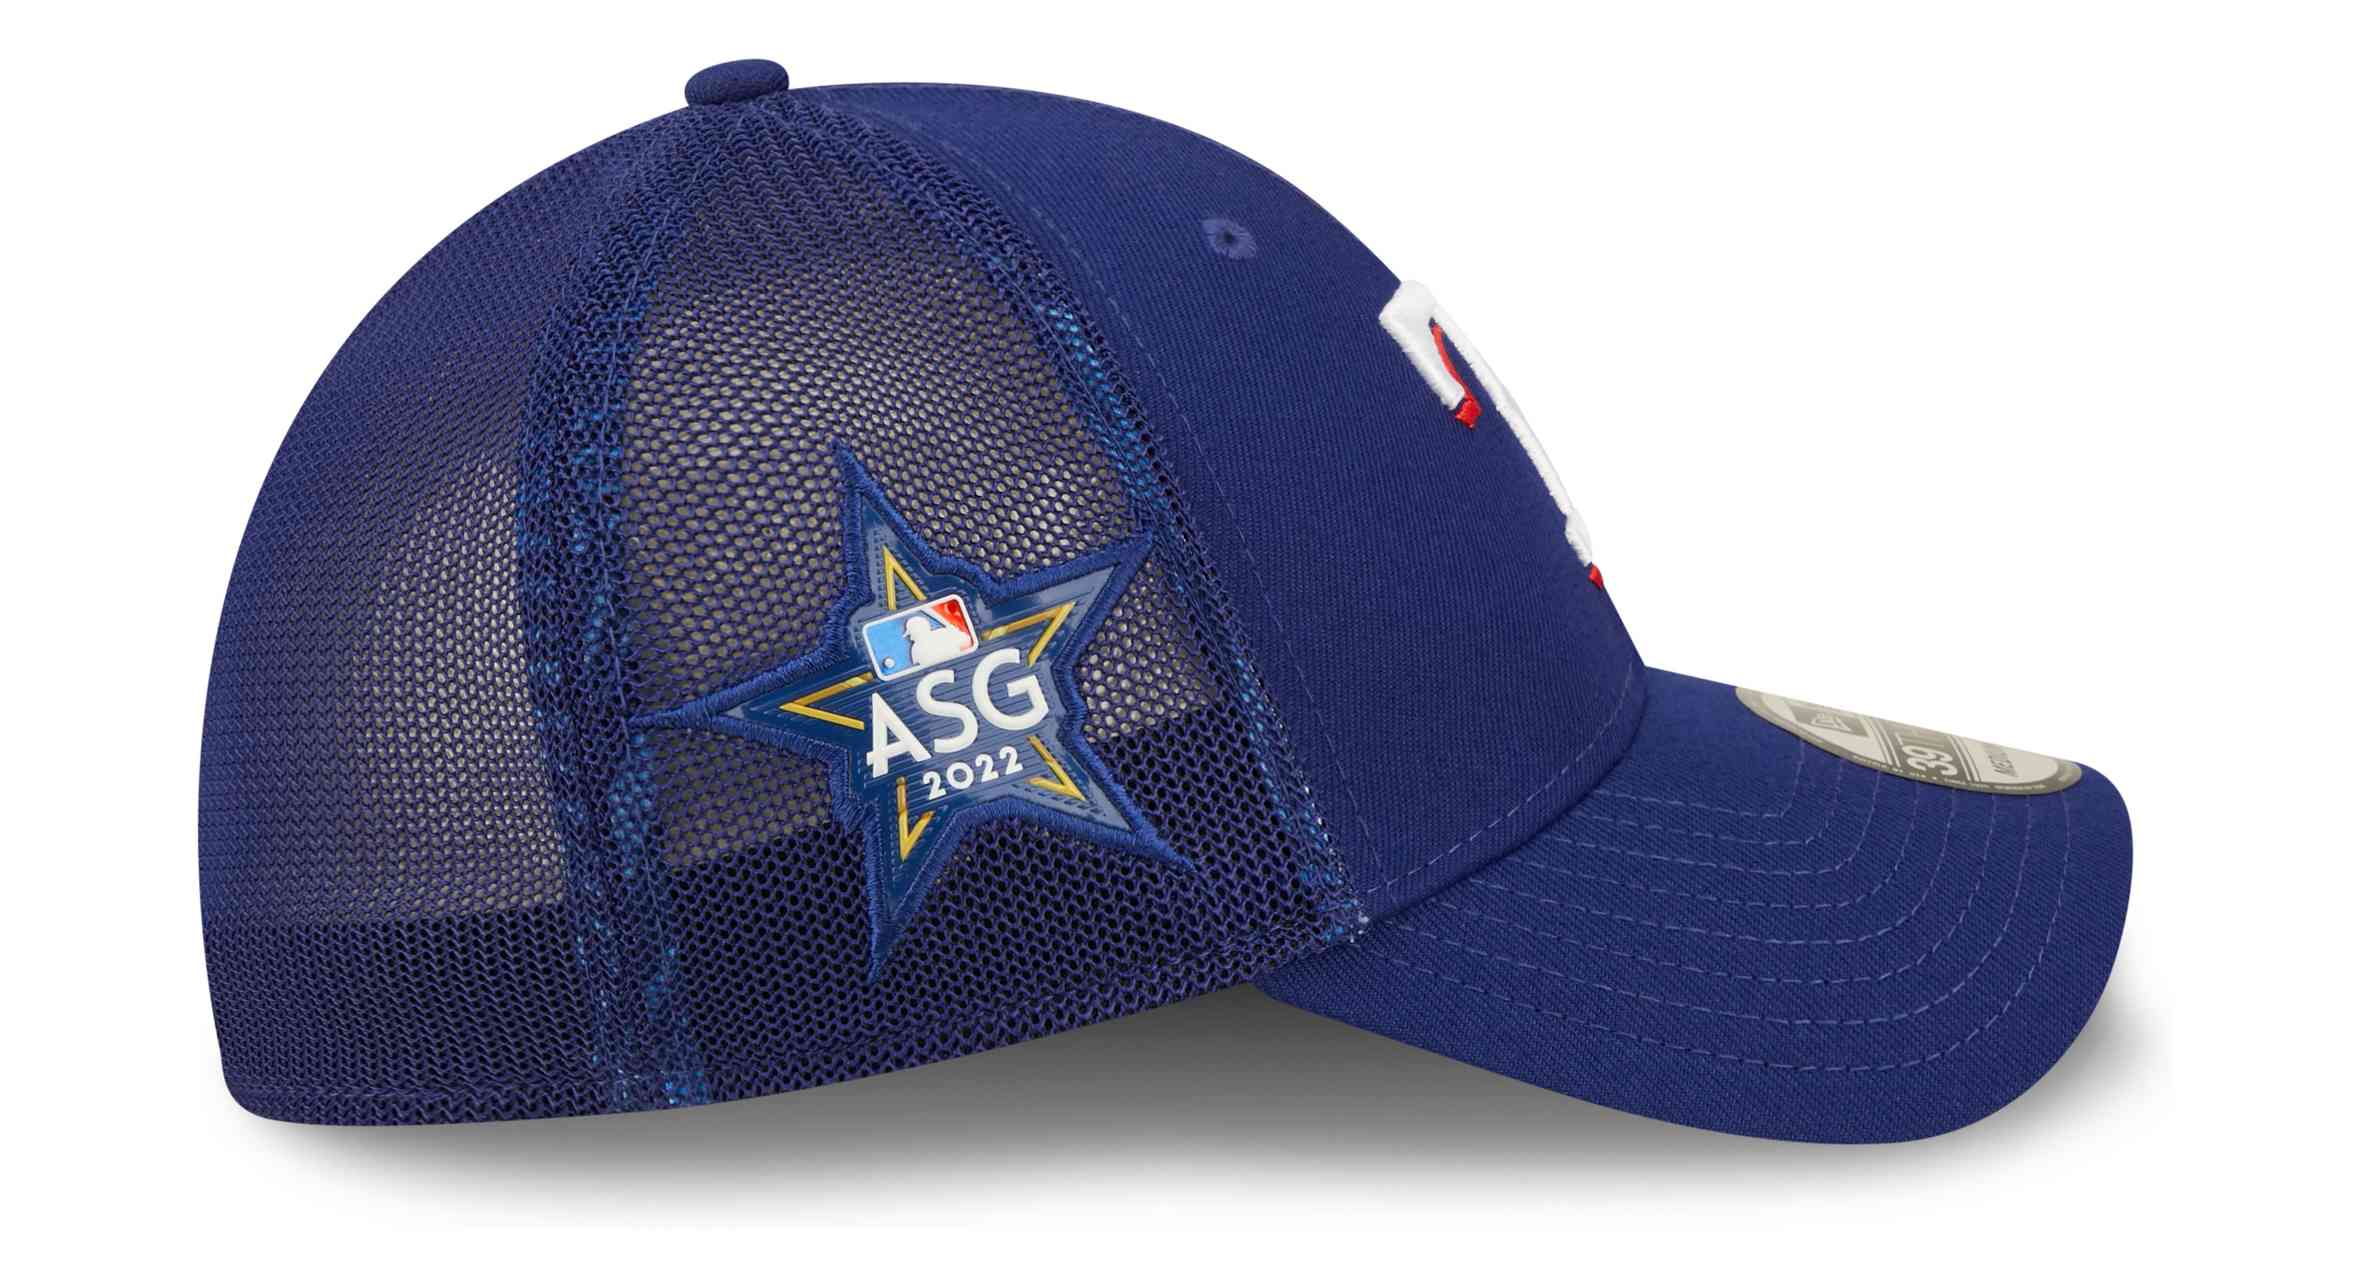 New Era - MLB Texas Rangers All Star Game Patch 39Thirty